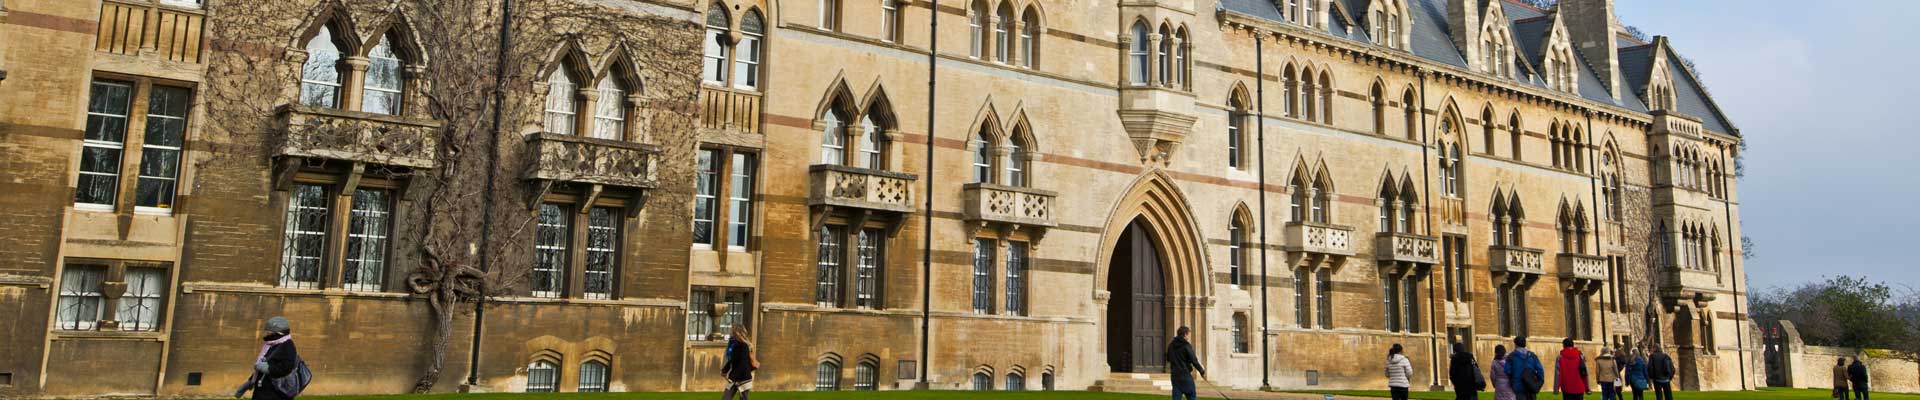 St Hilda's College, Oxford